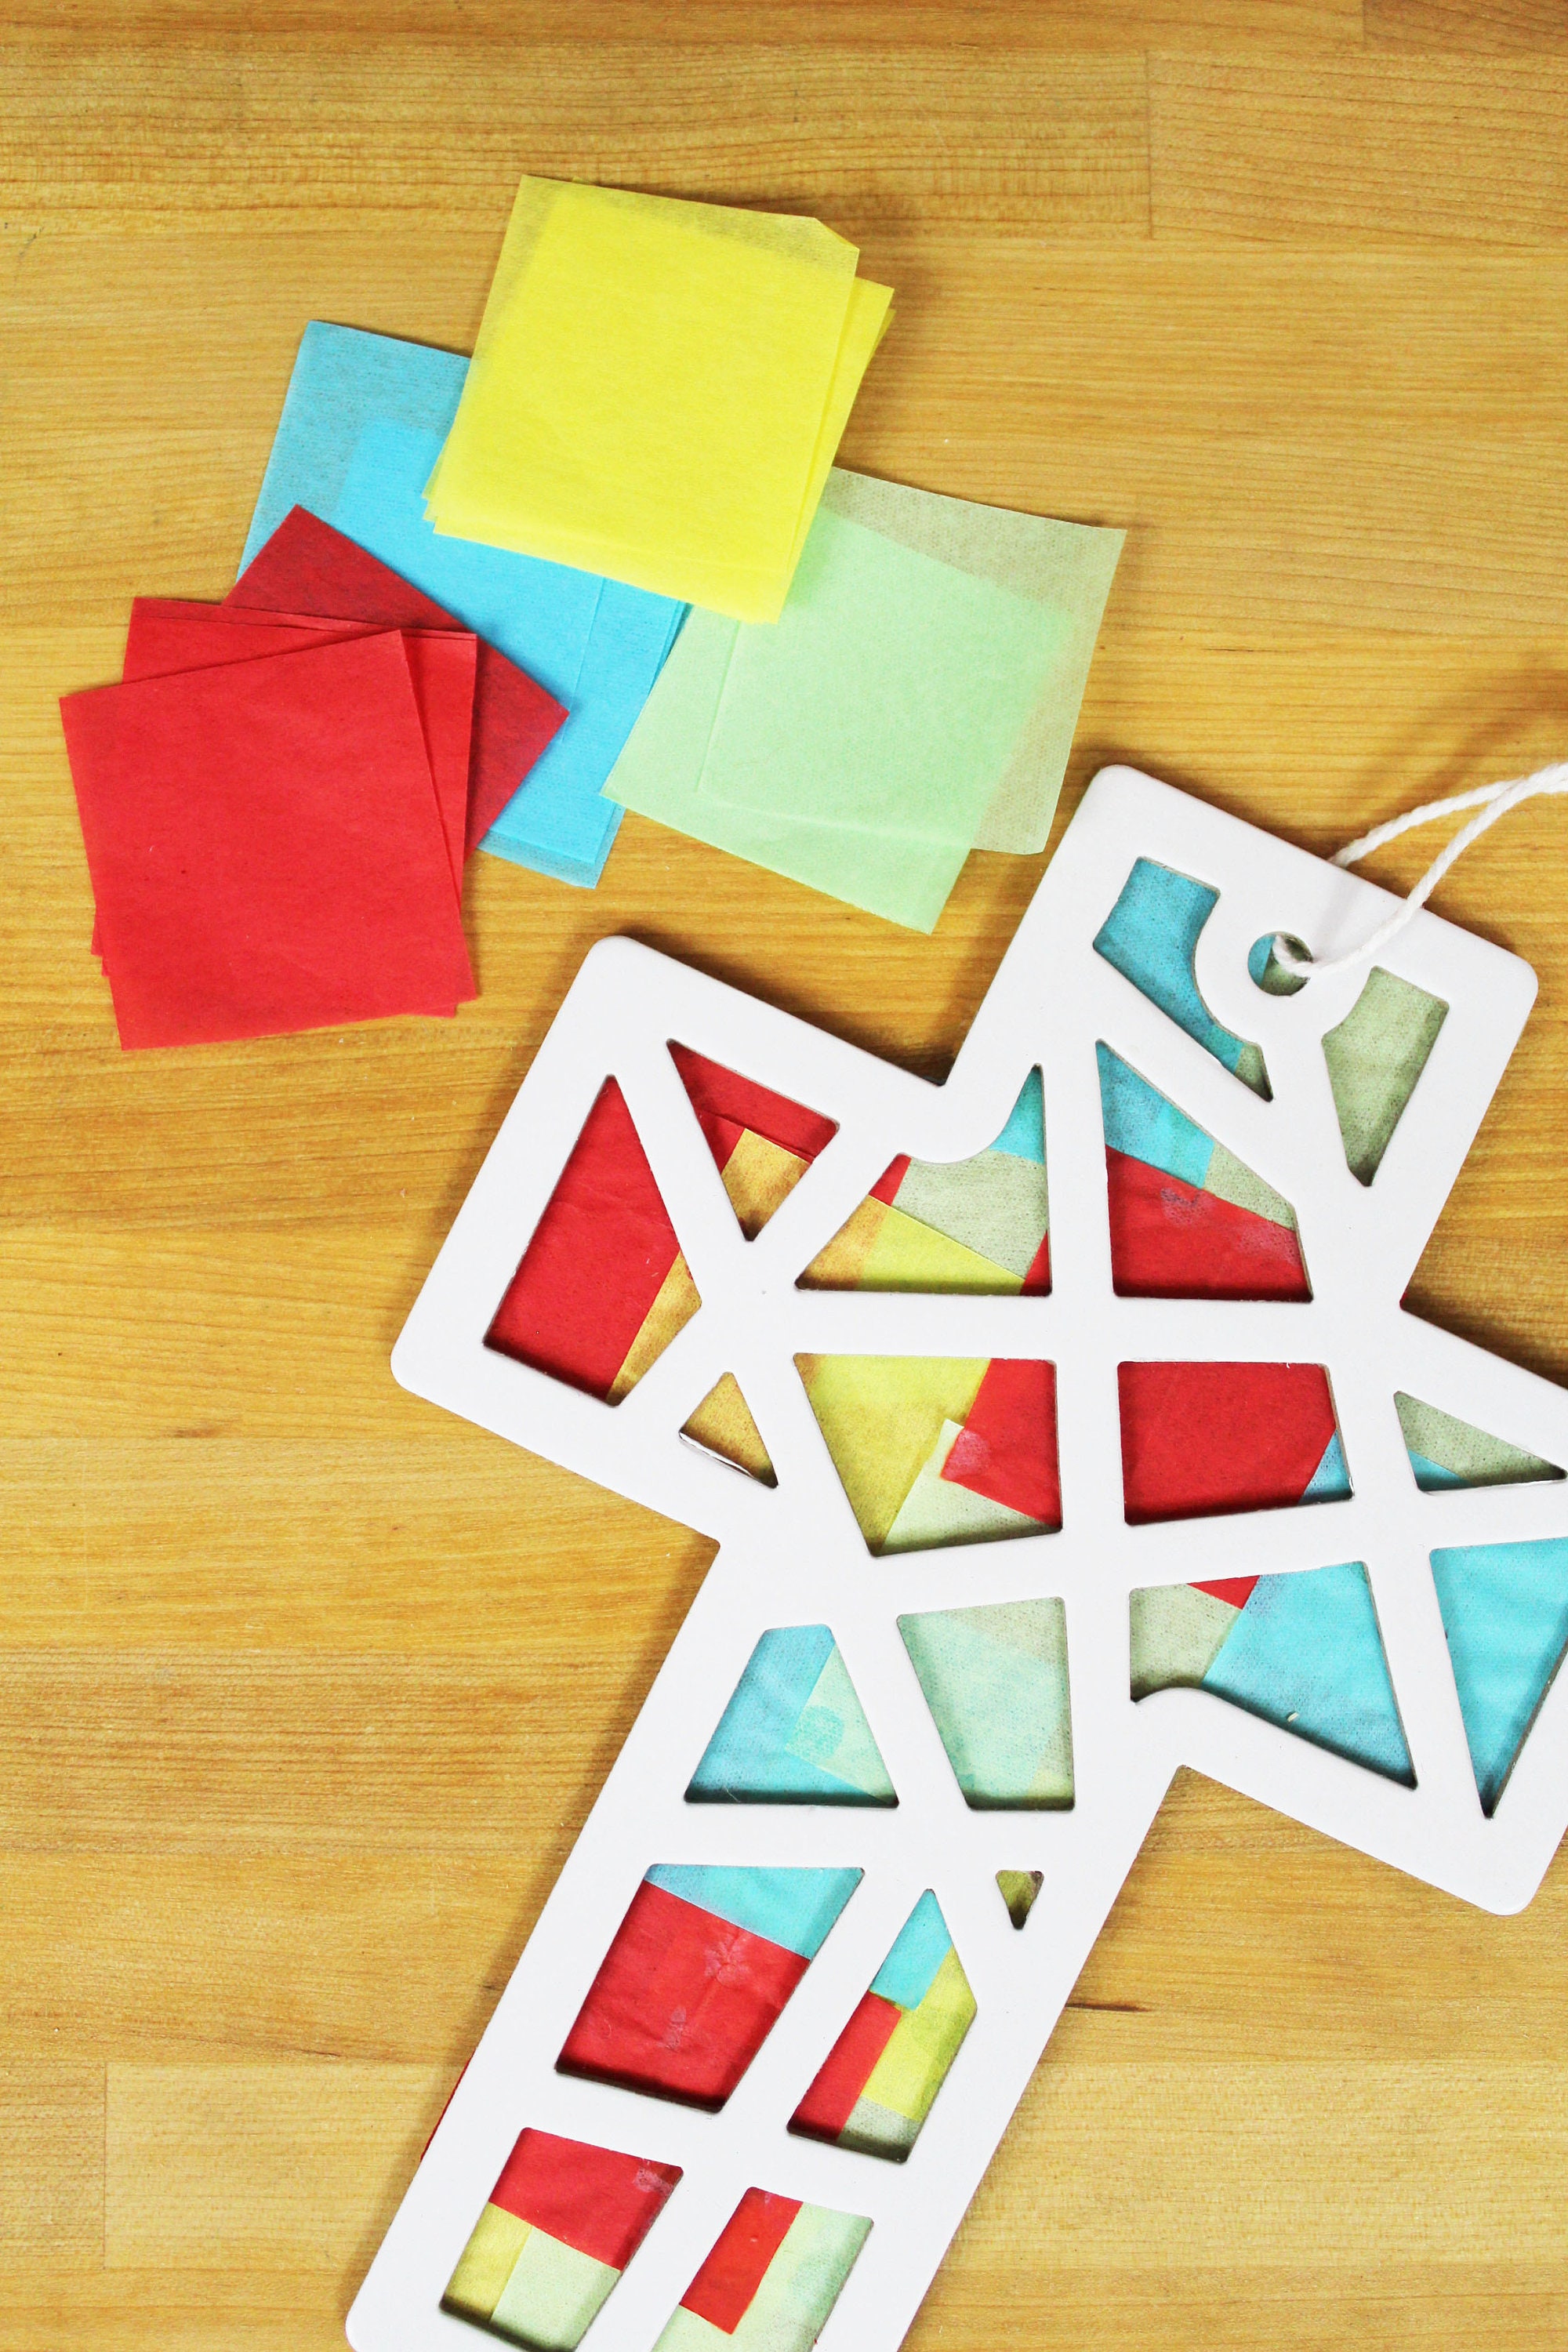 Tissue Paper 480ct 5in Squares Primary Colors